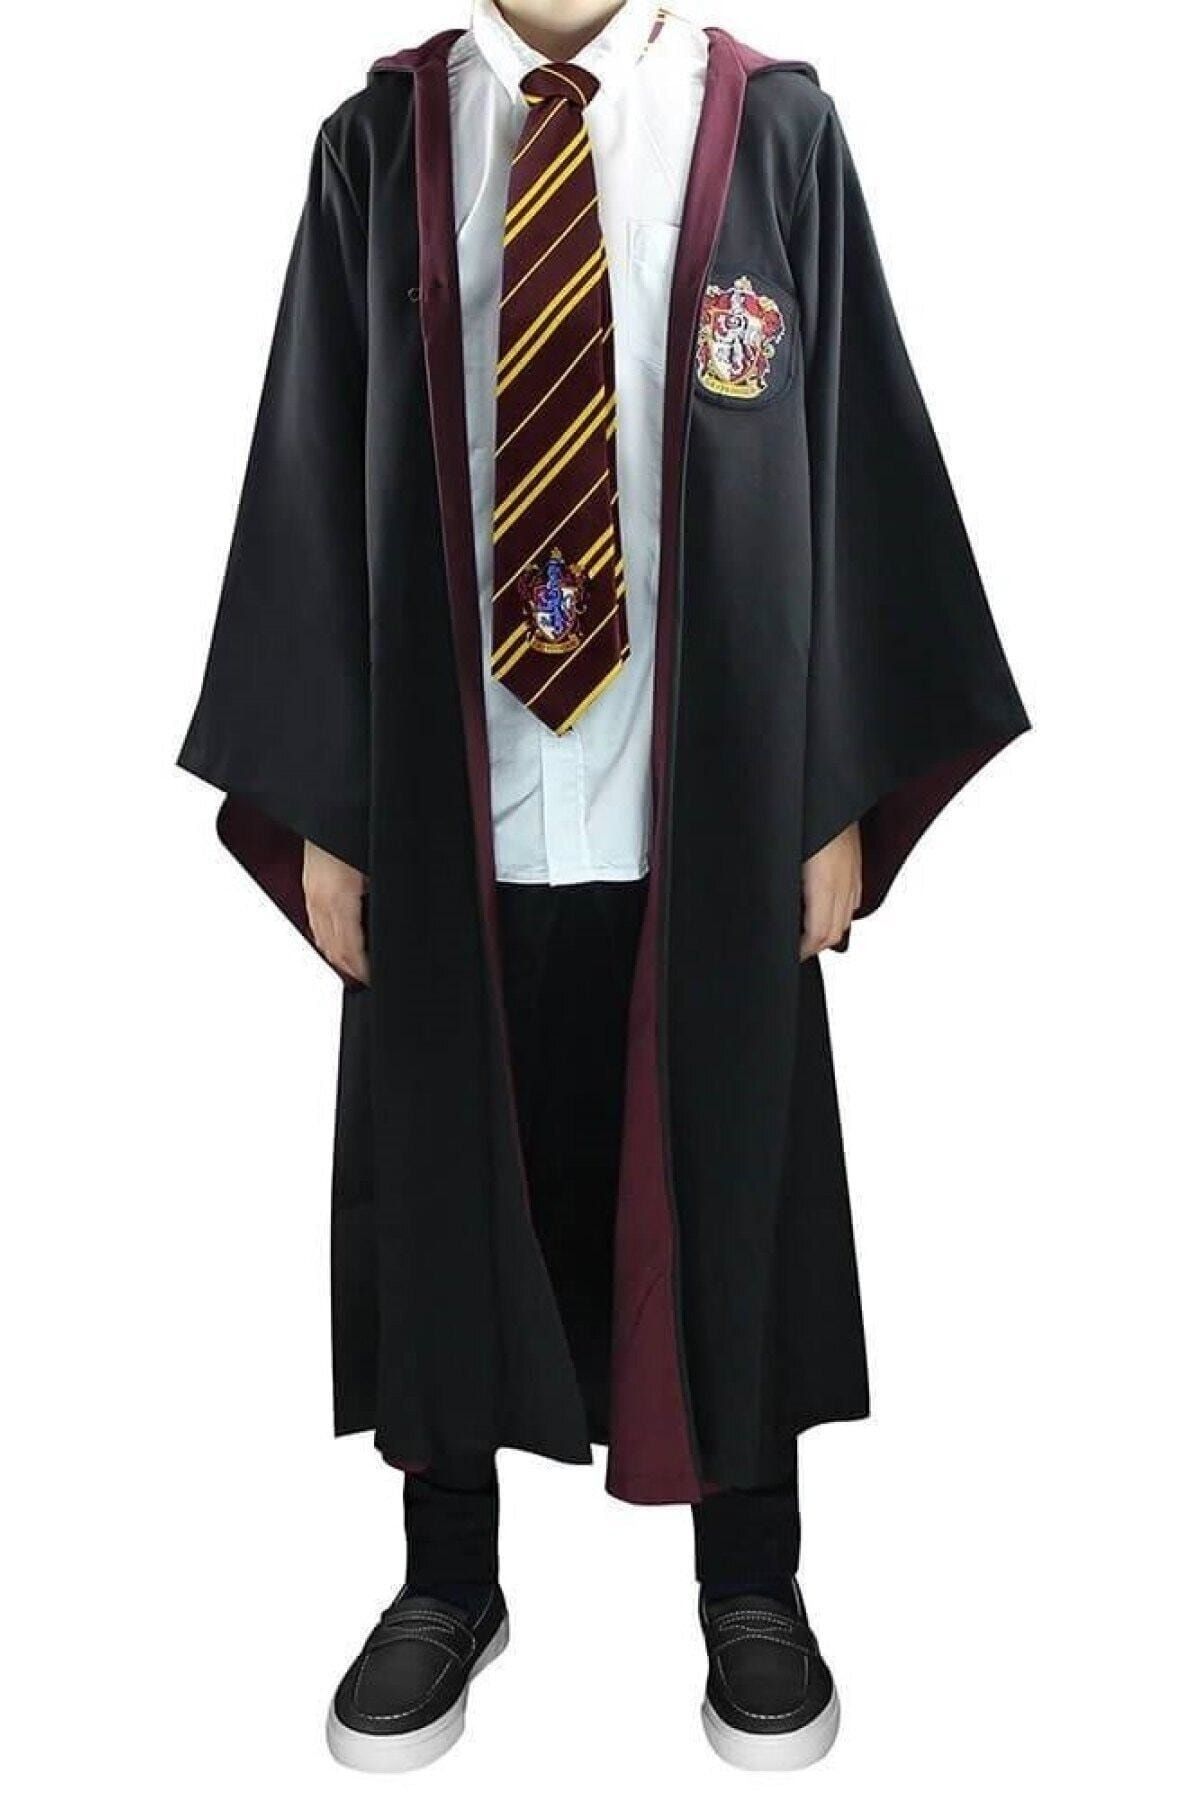 emirza moda Unisex Harry Potter Gryffindor Model Cübbe